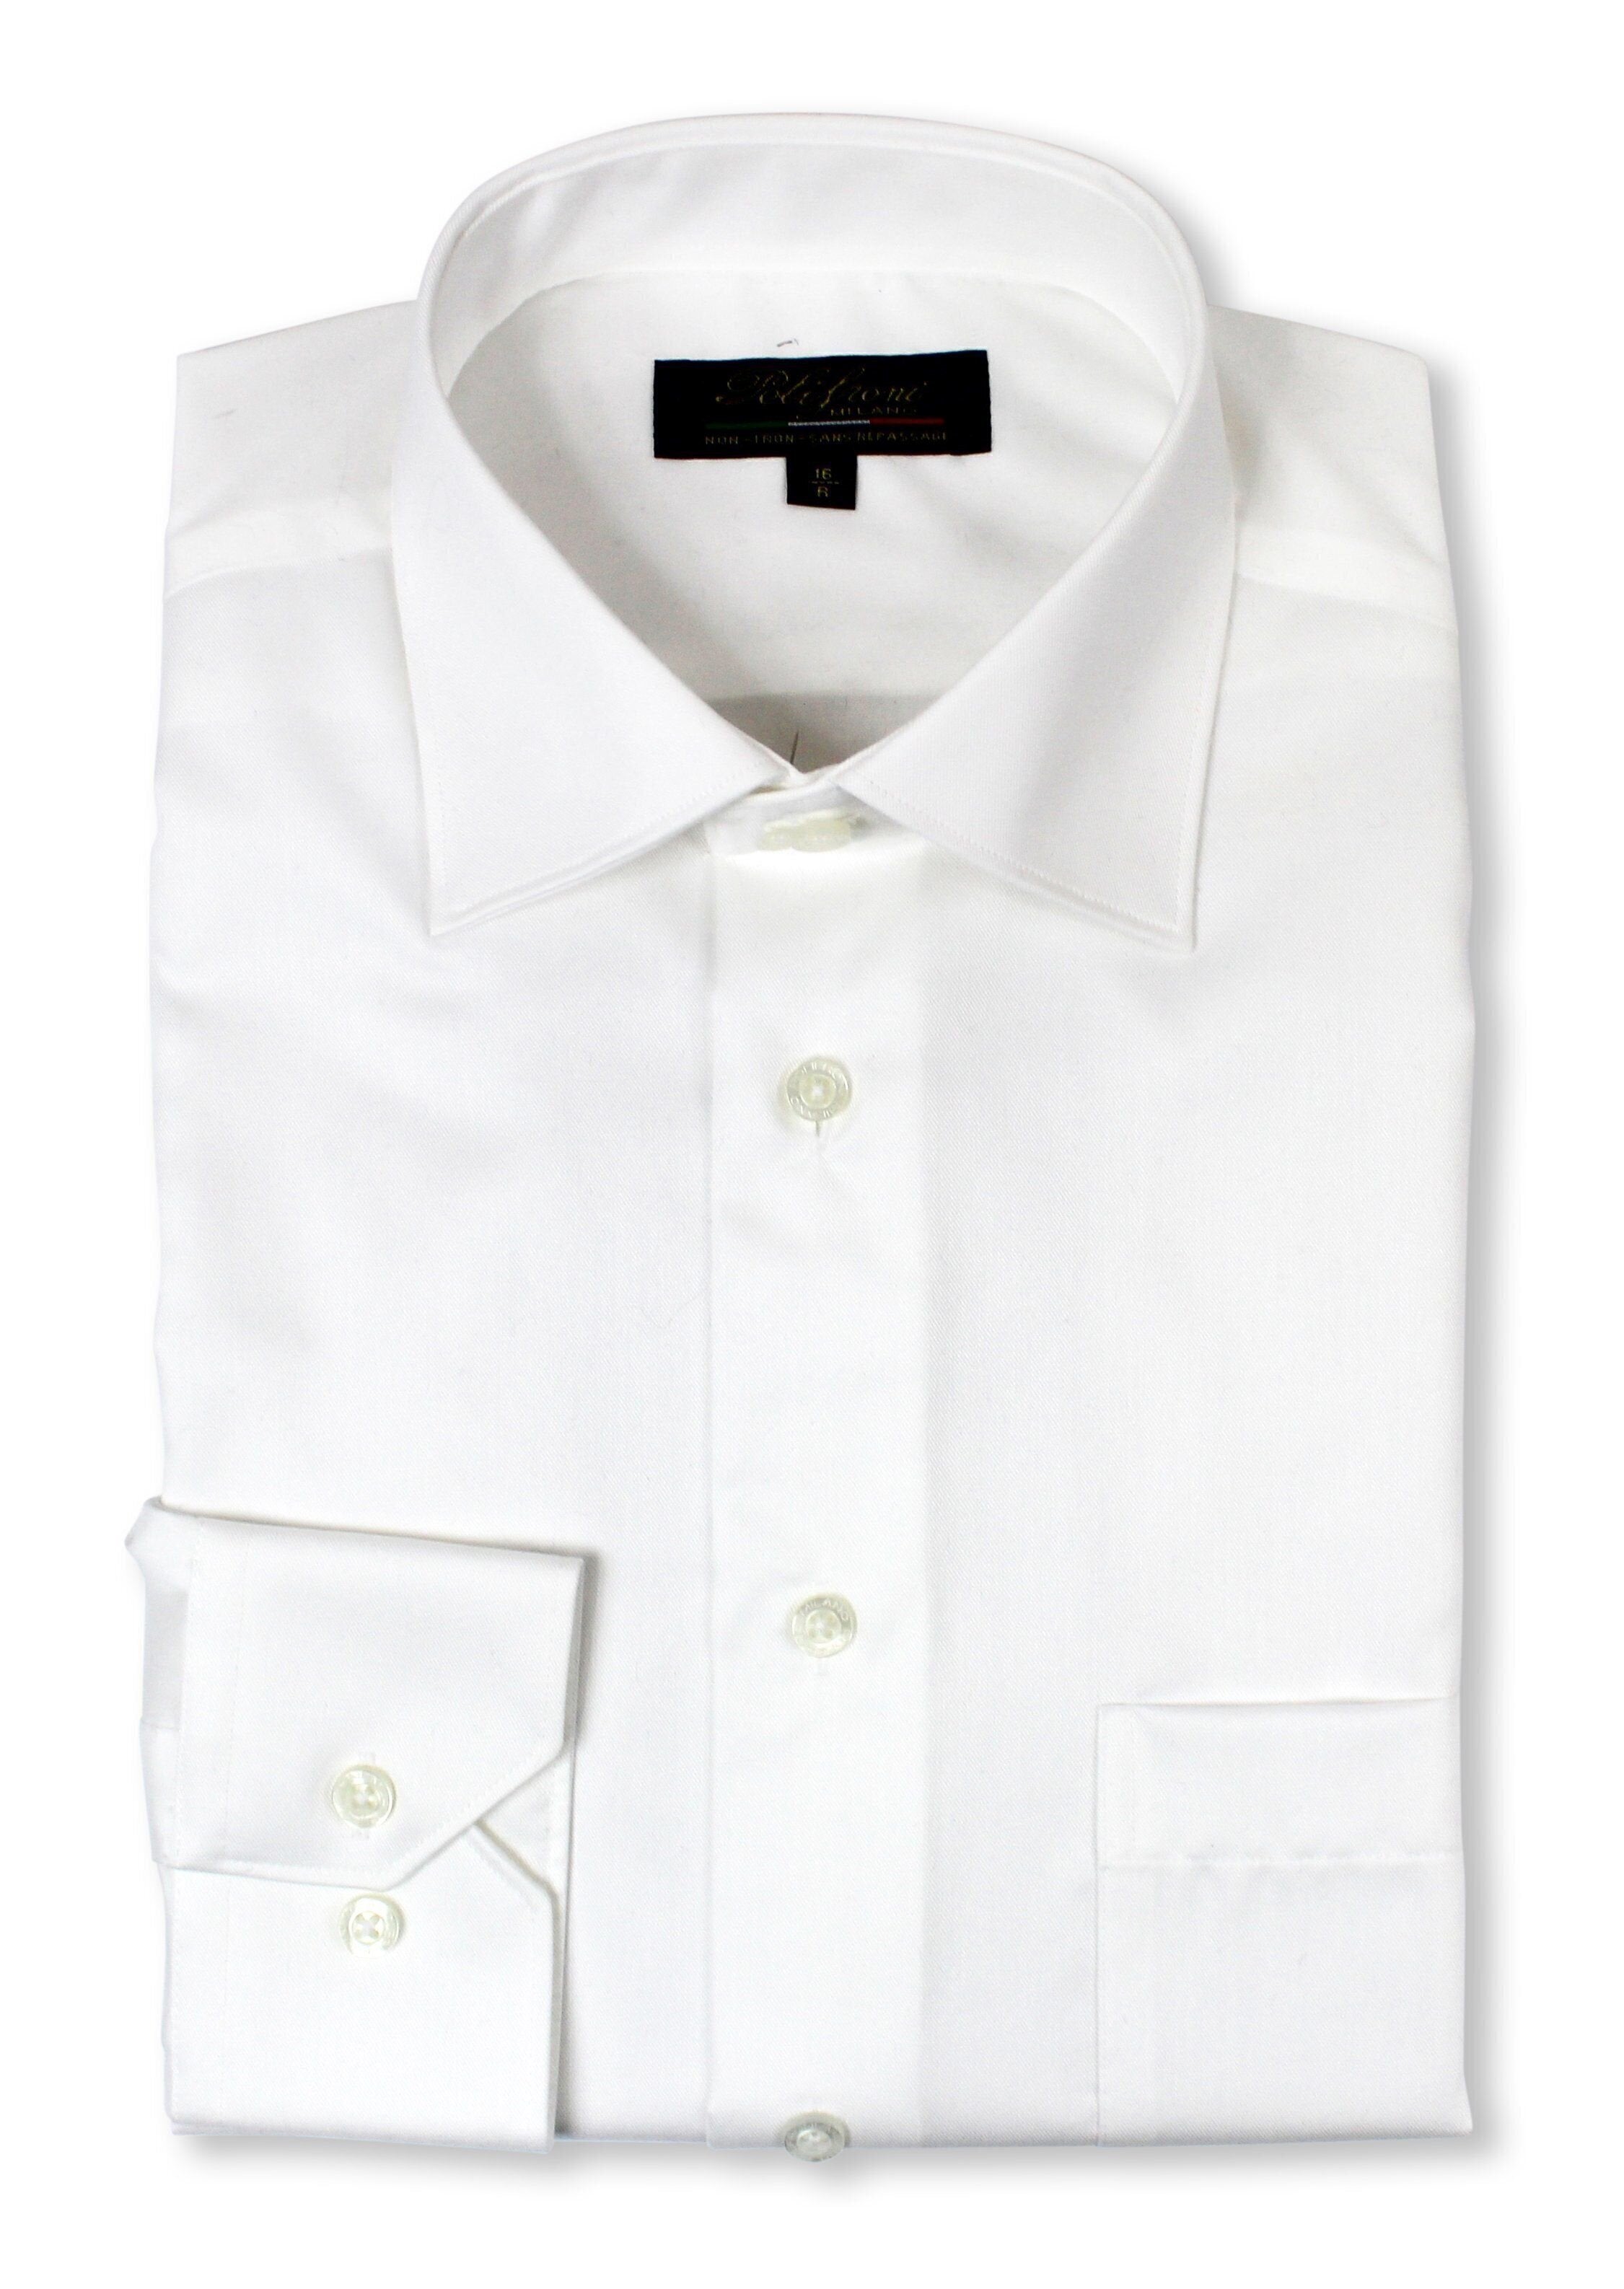 POLIFRONI MILANO DRESS SHIRT CLASSIC FIT WHITE | Caswell's Fine Menswear